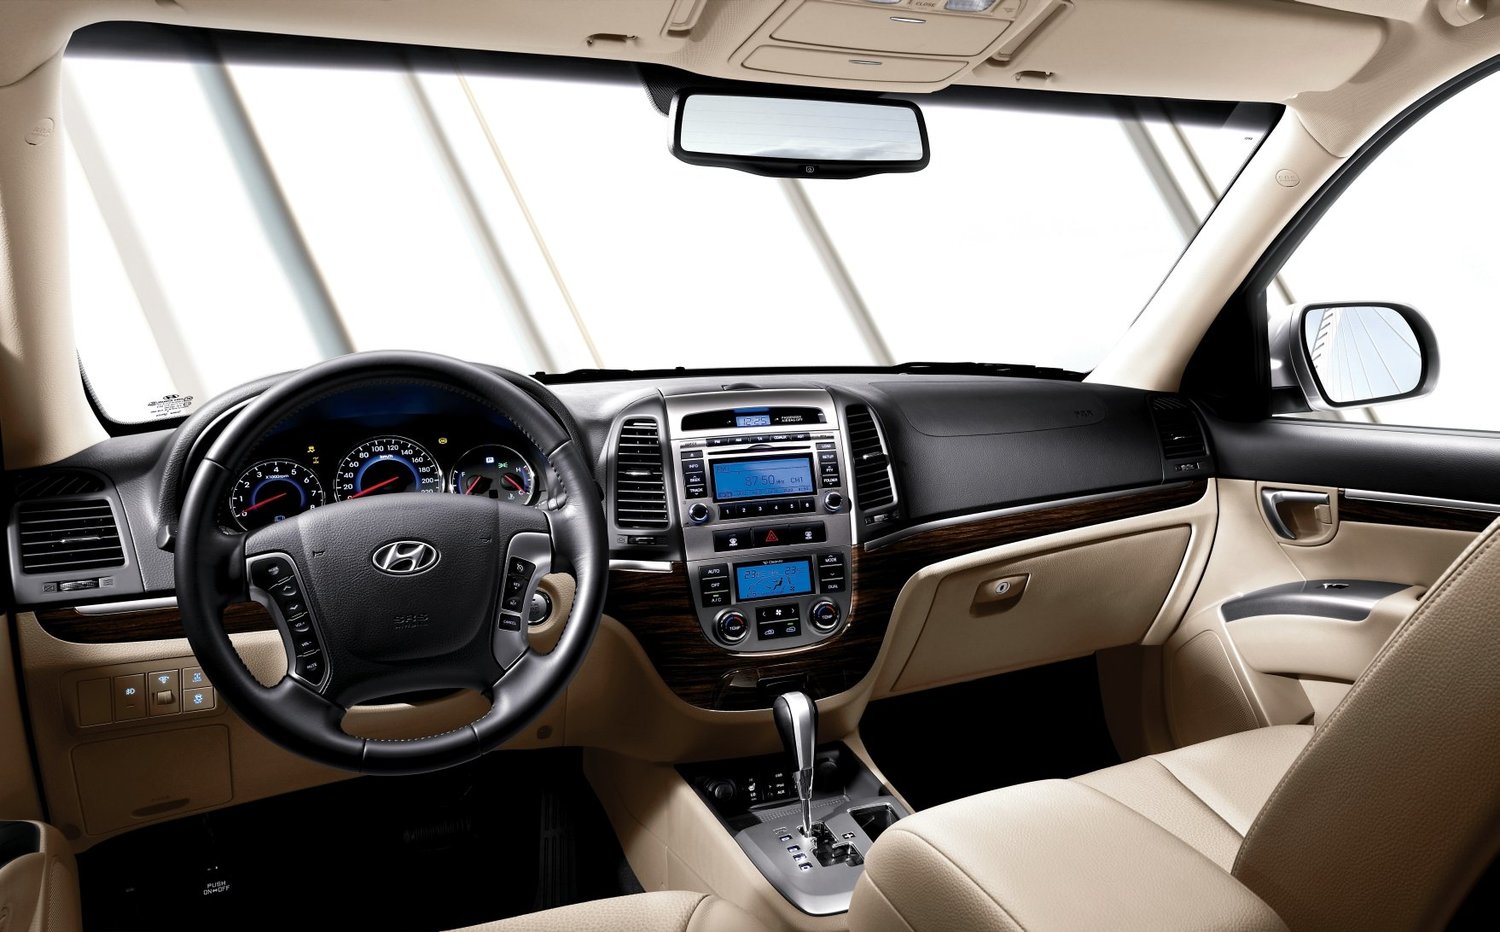 кроссовер Hyundai Santa Fe 2010 - 2012г выпуска модификация 2.0 AT (184 л.с.)